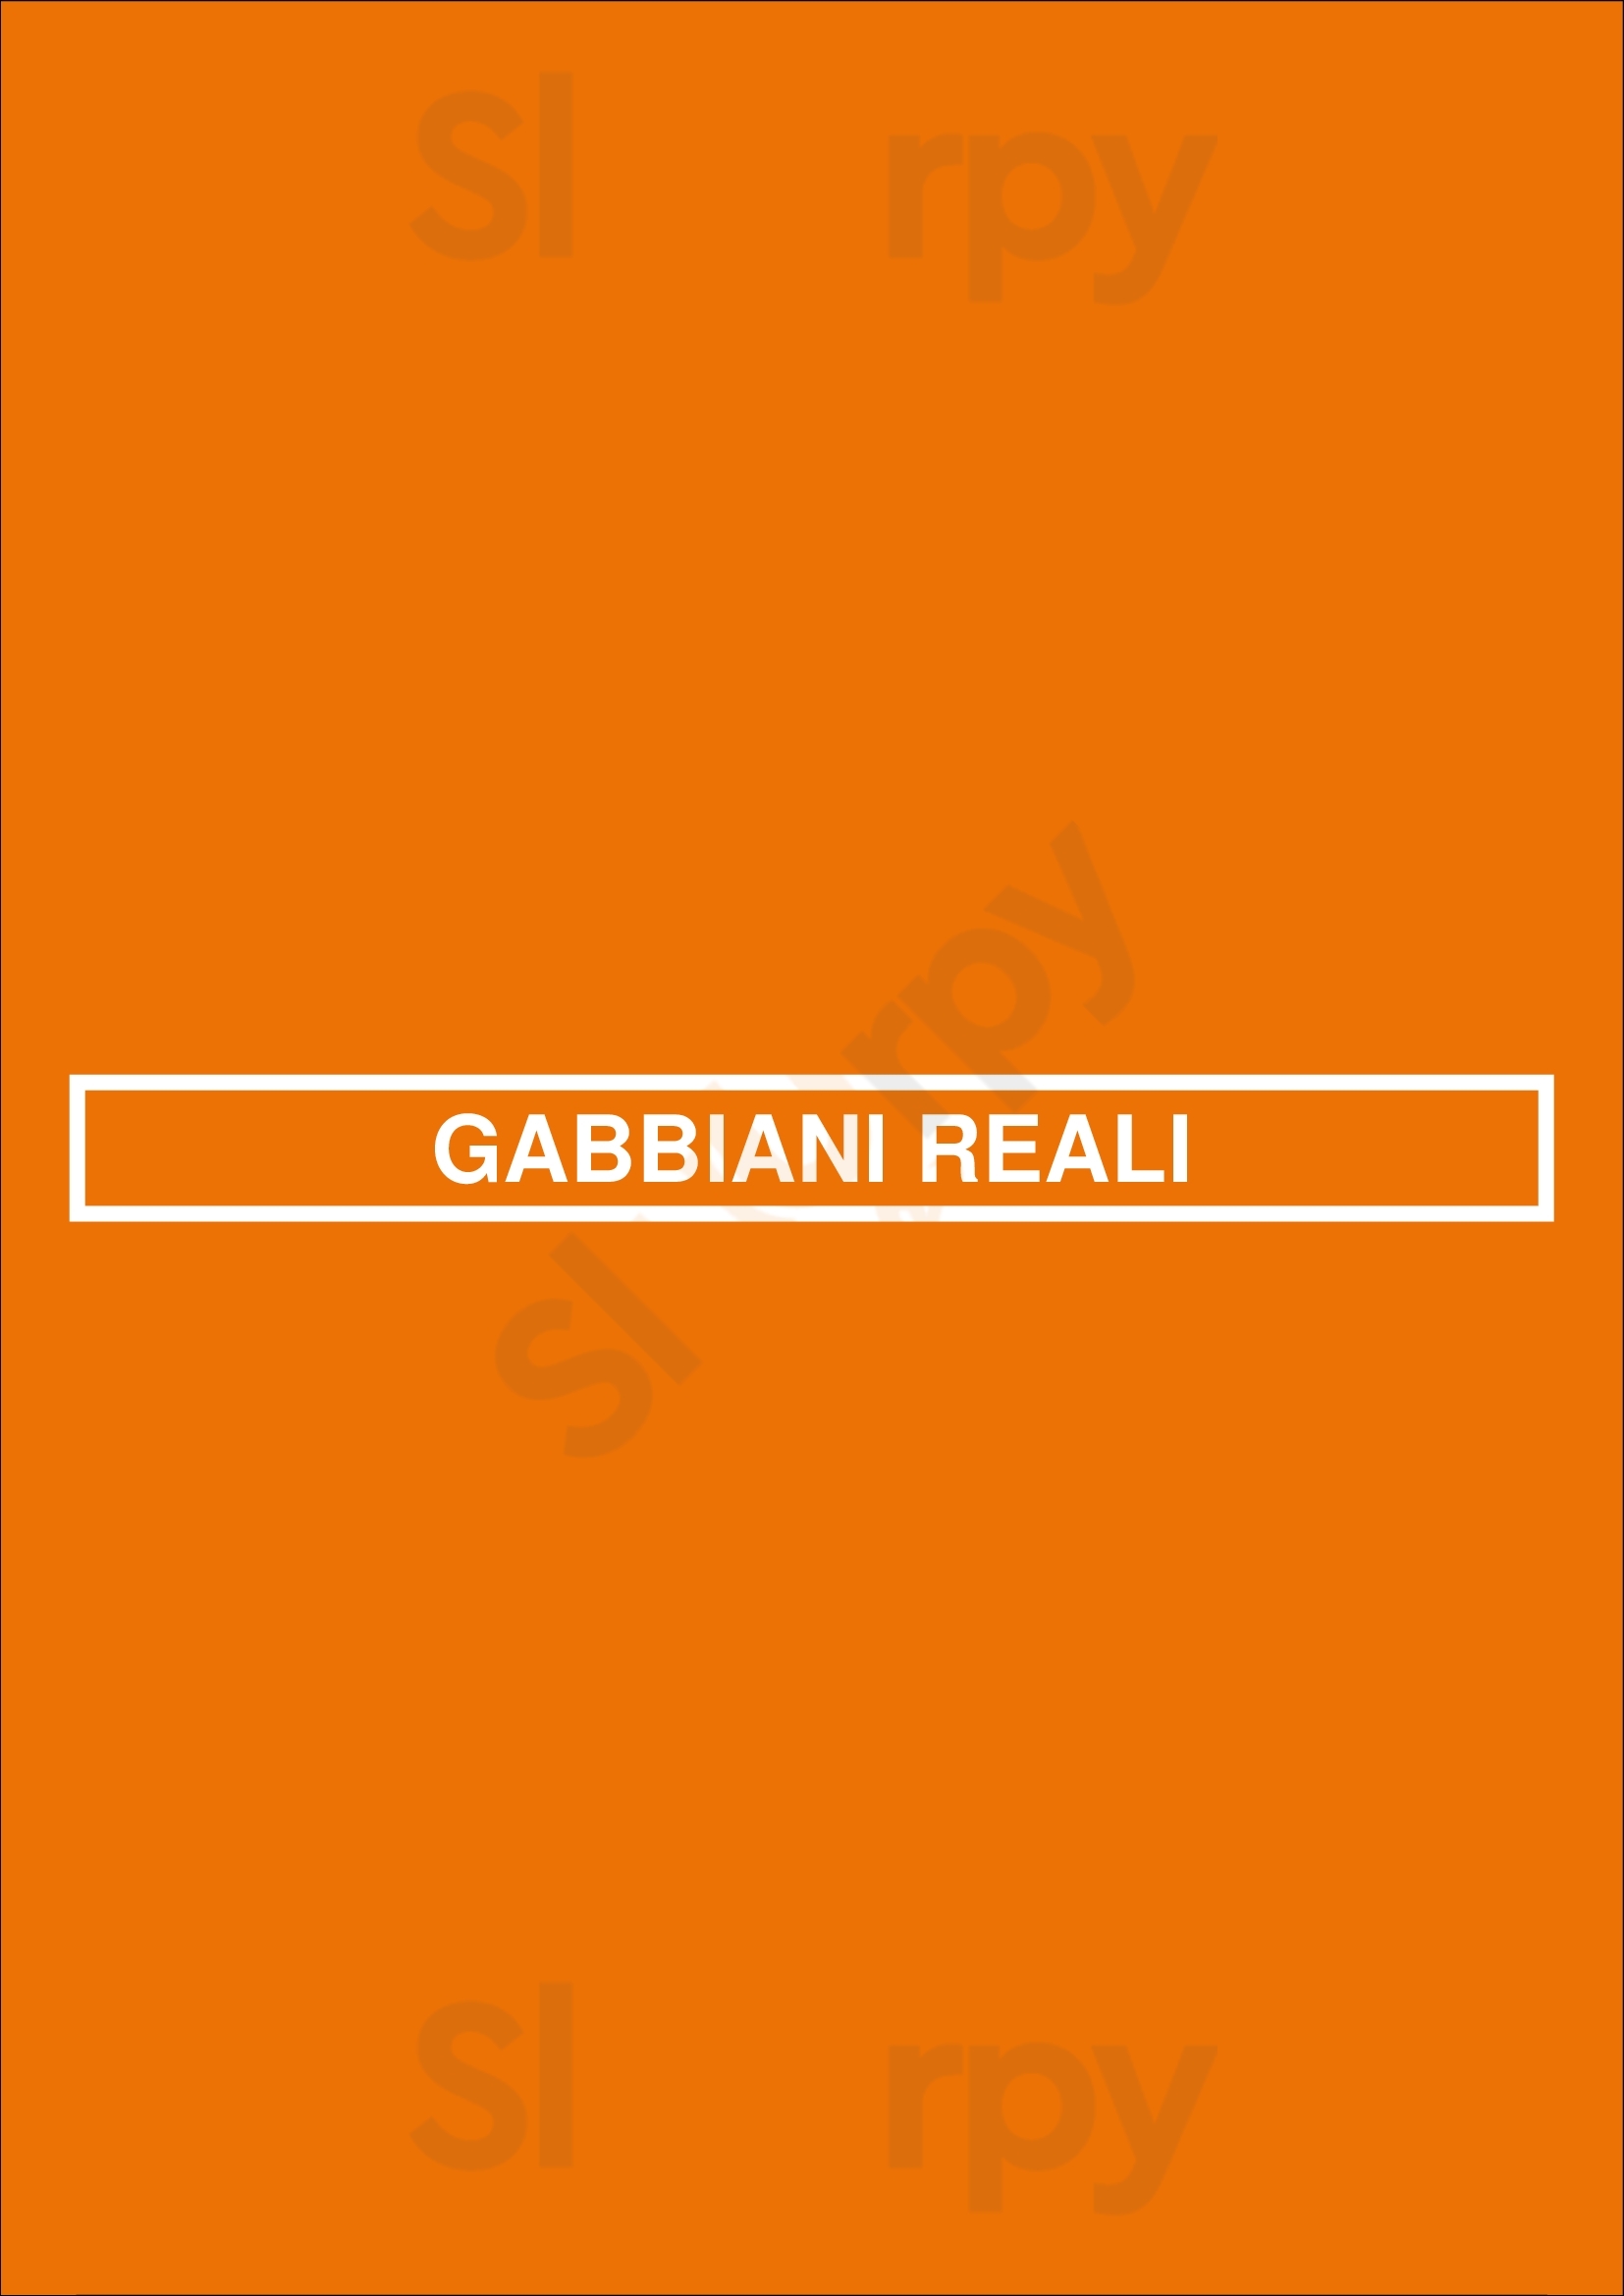 Gabbiani Reali Bruxelles Menu - 1